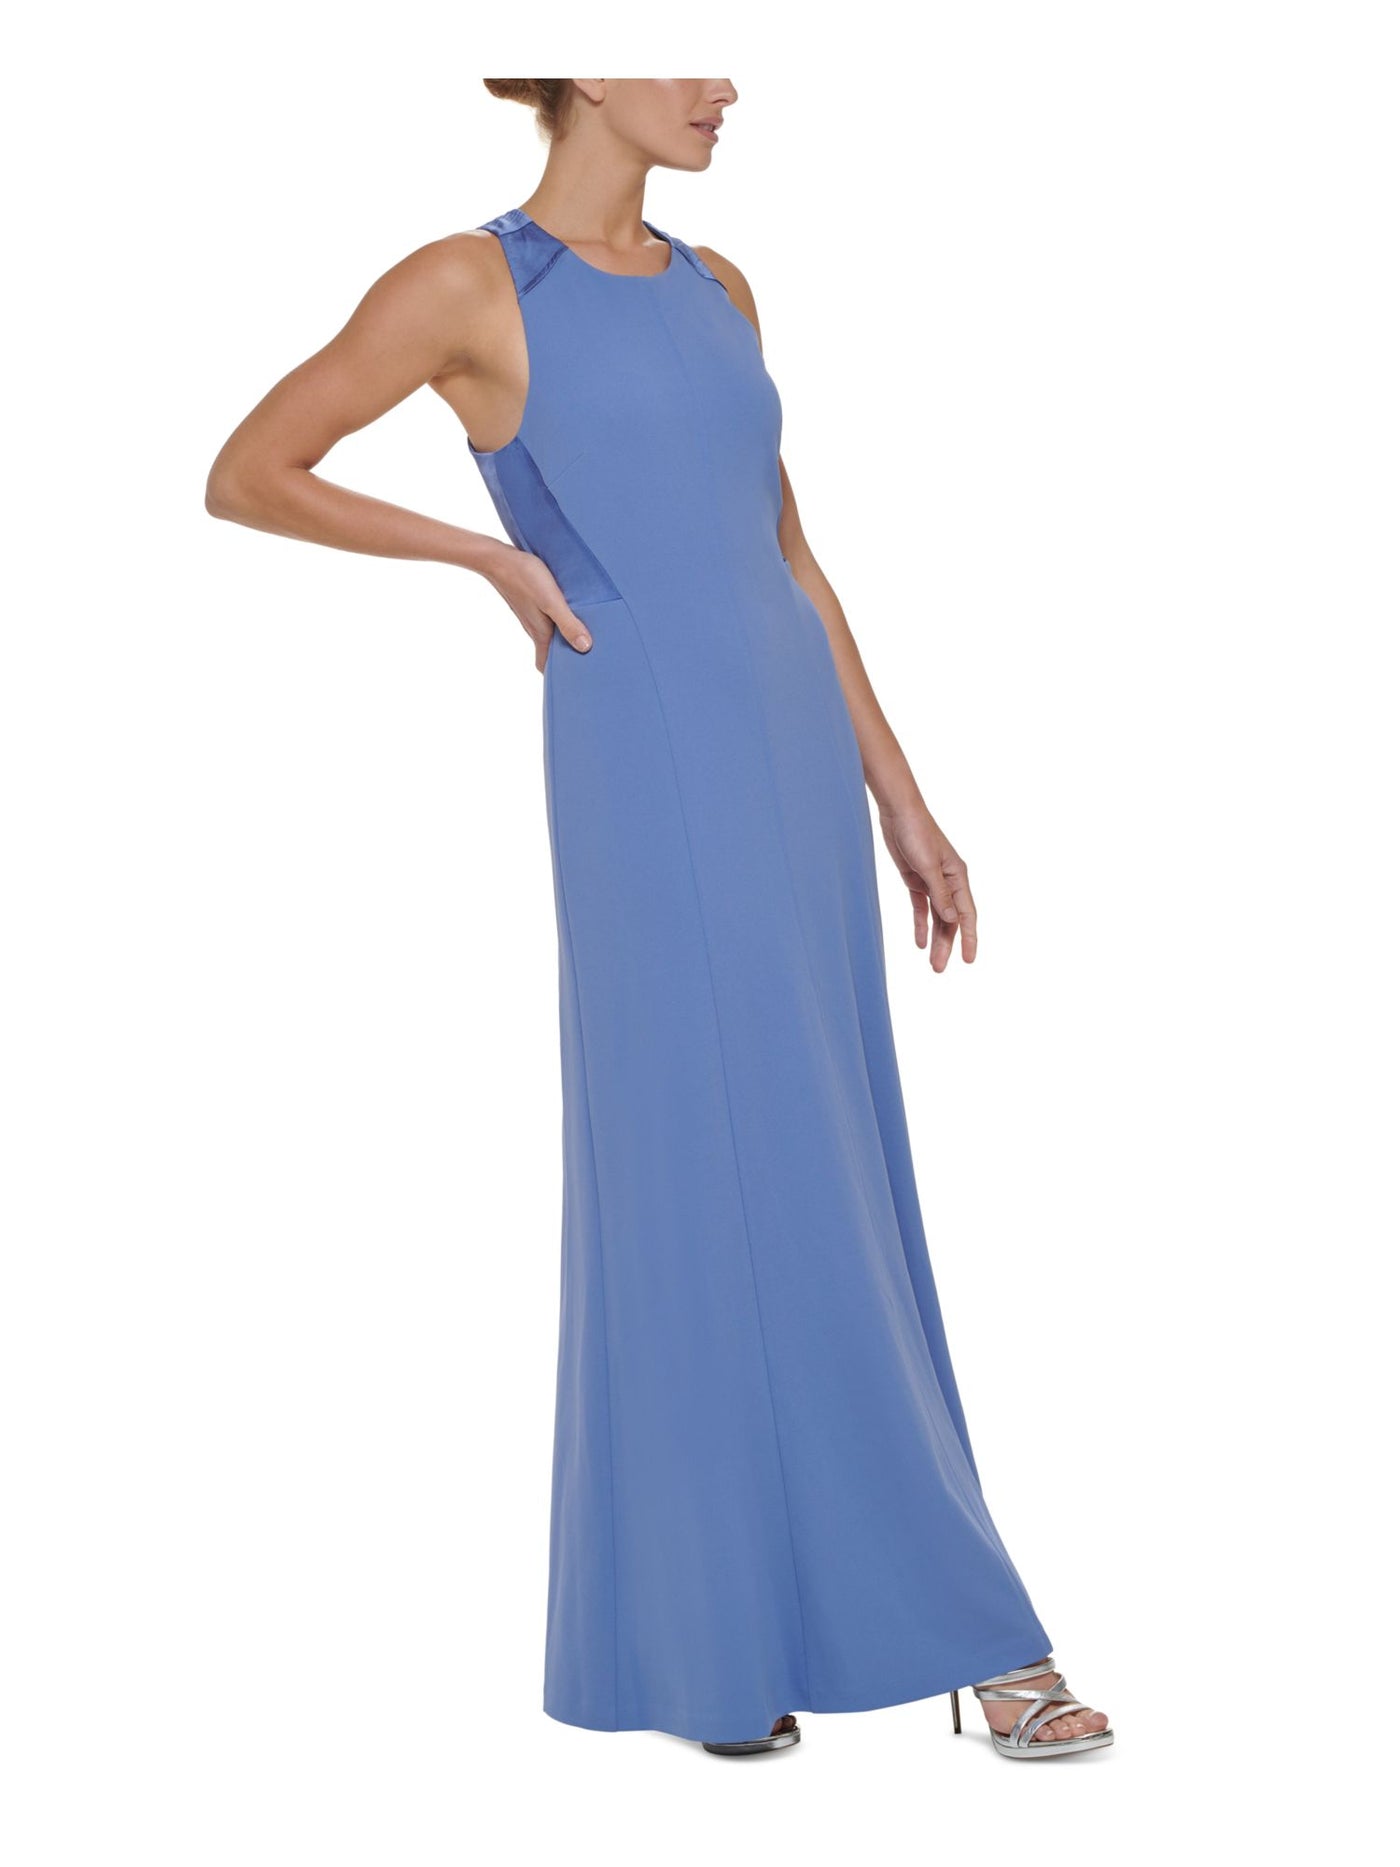 DKNY Womens Blue Zippered Cross Back Scuba Crepe Sleeveless Jewel Neck Full-Length Evening Gown Dress 12